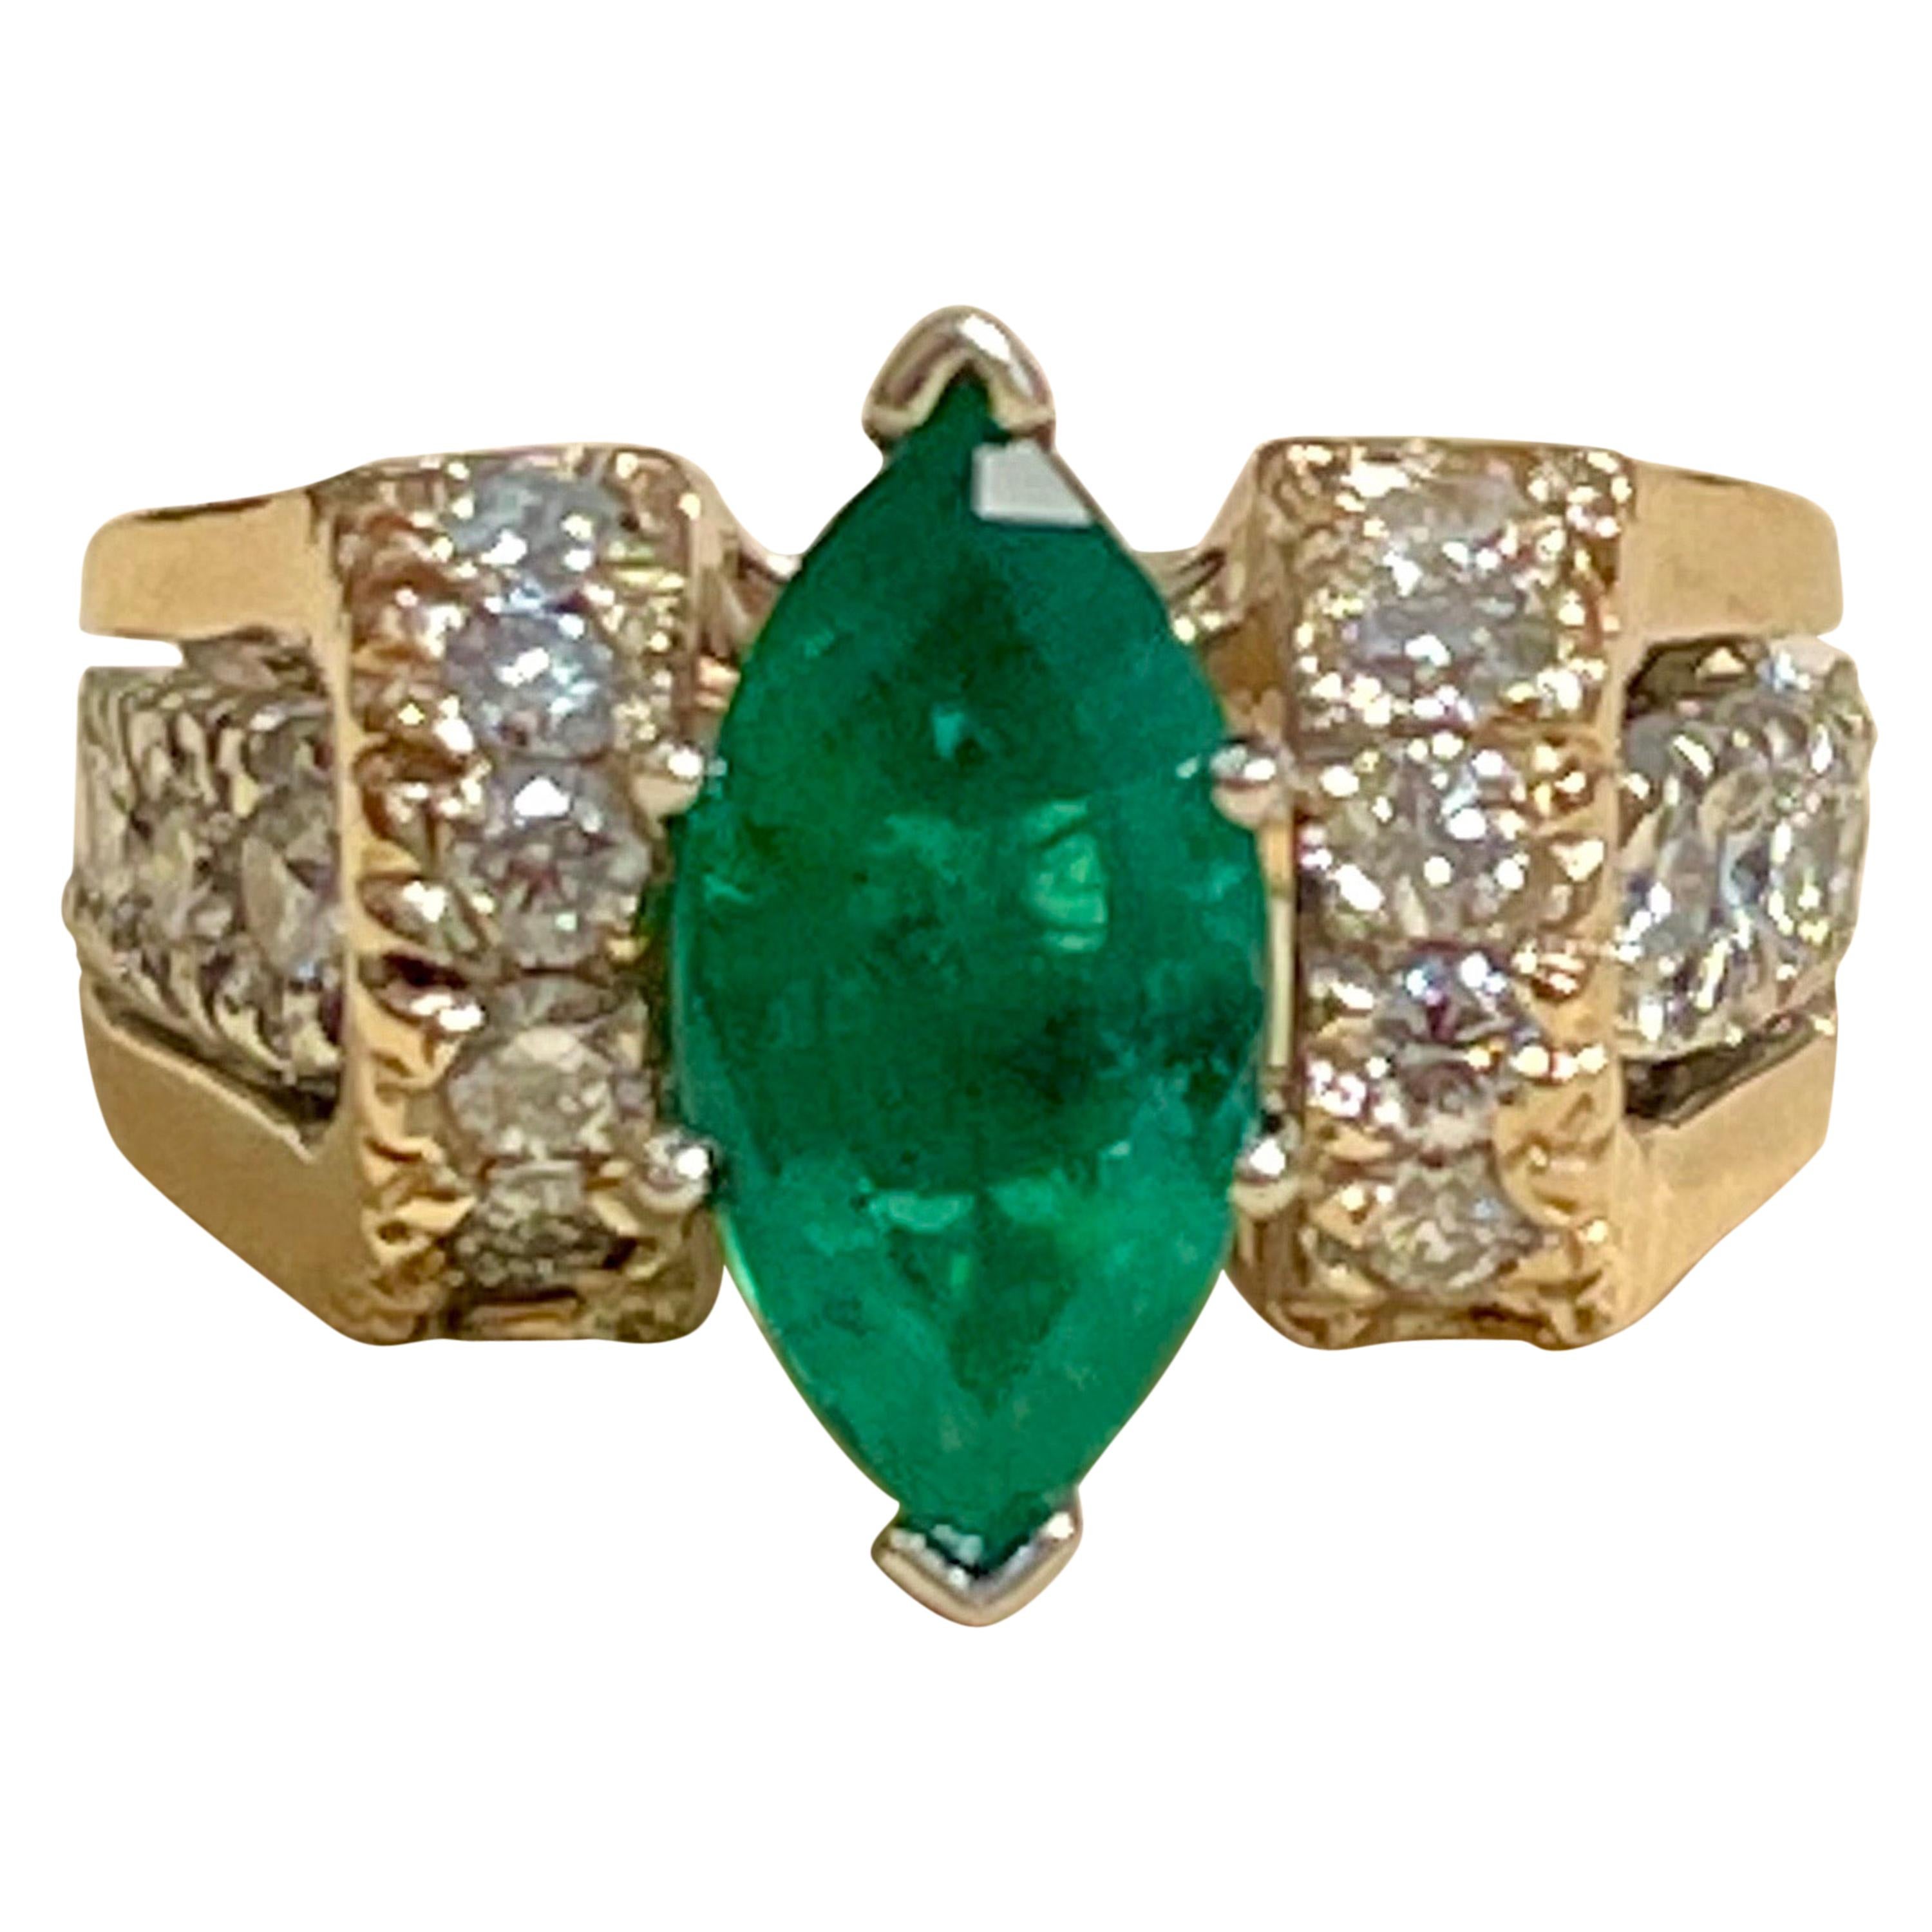 2.5 Carat Marquise Cut Emerald and Diamond Ring 14 Karat Yellow Gold